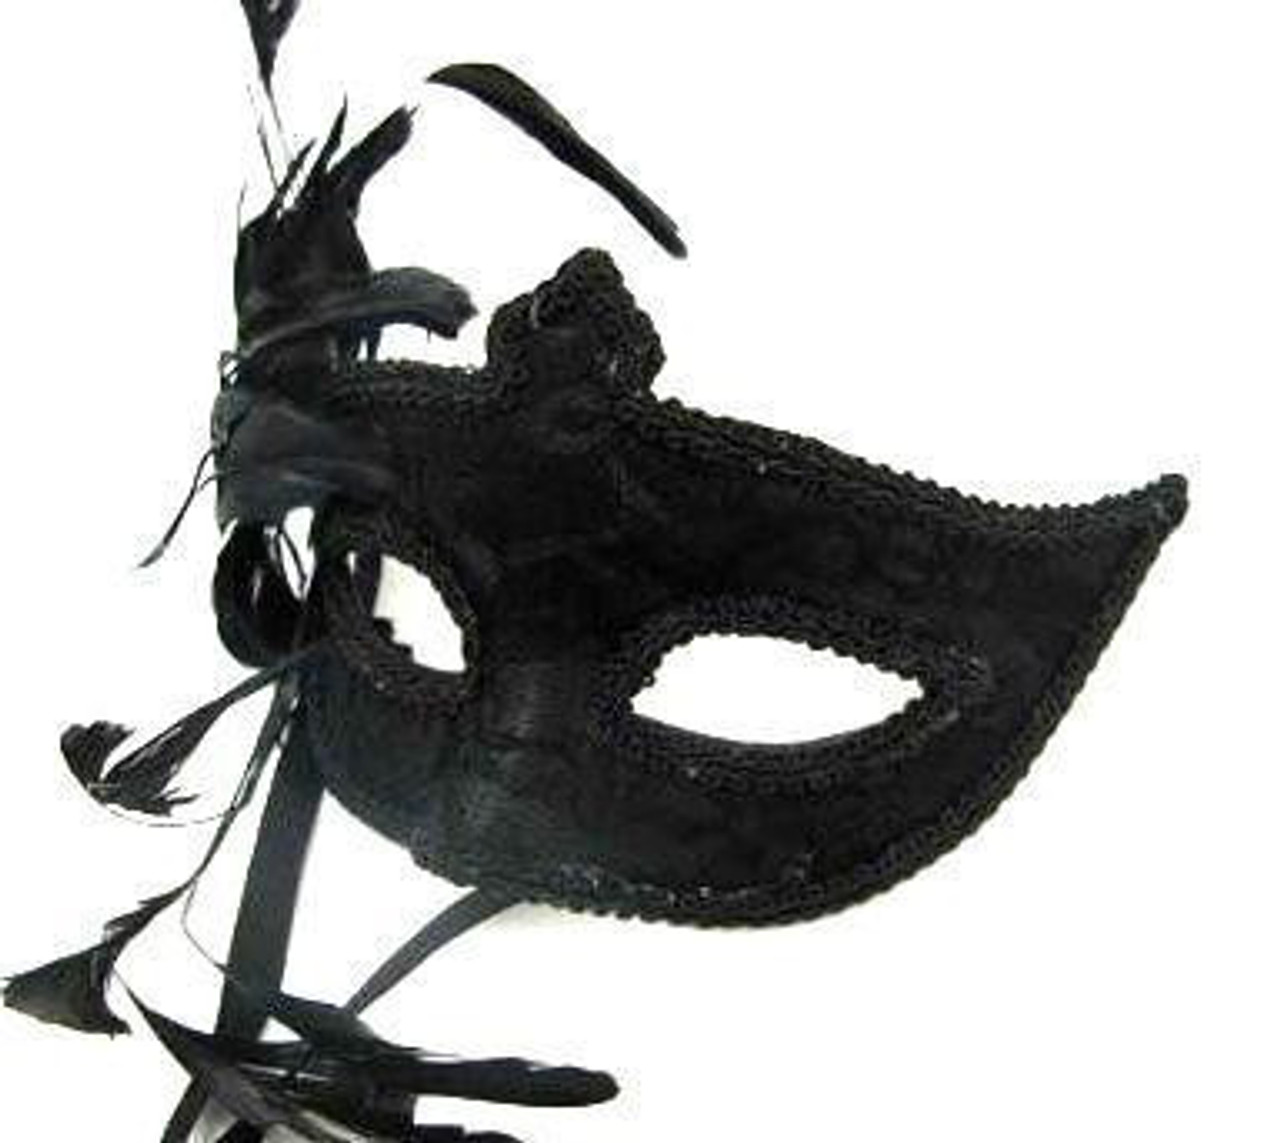 masks to decorate, masks to decorate superhero masks to decorate blank  sashes to decorate